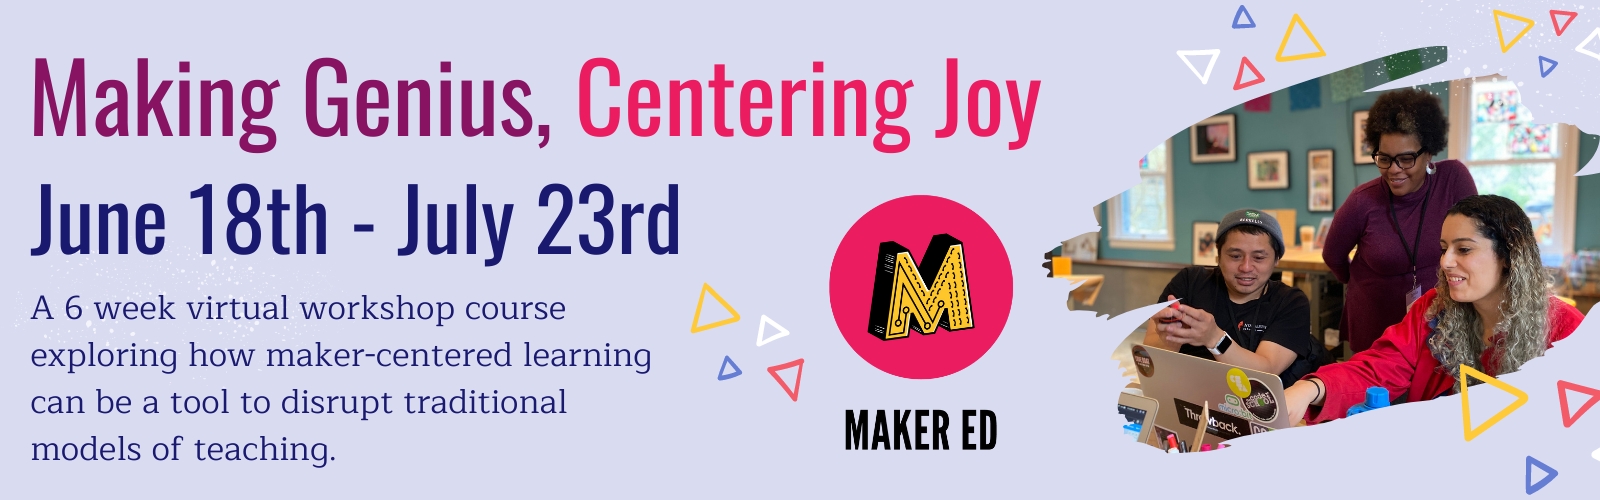 Our "Making Genius, Centering Joy" six week workshop starts June 18th